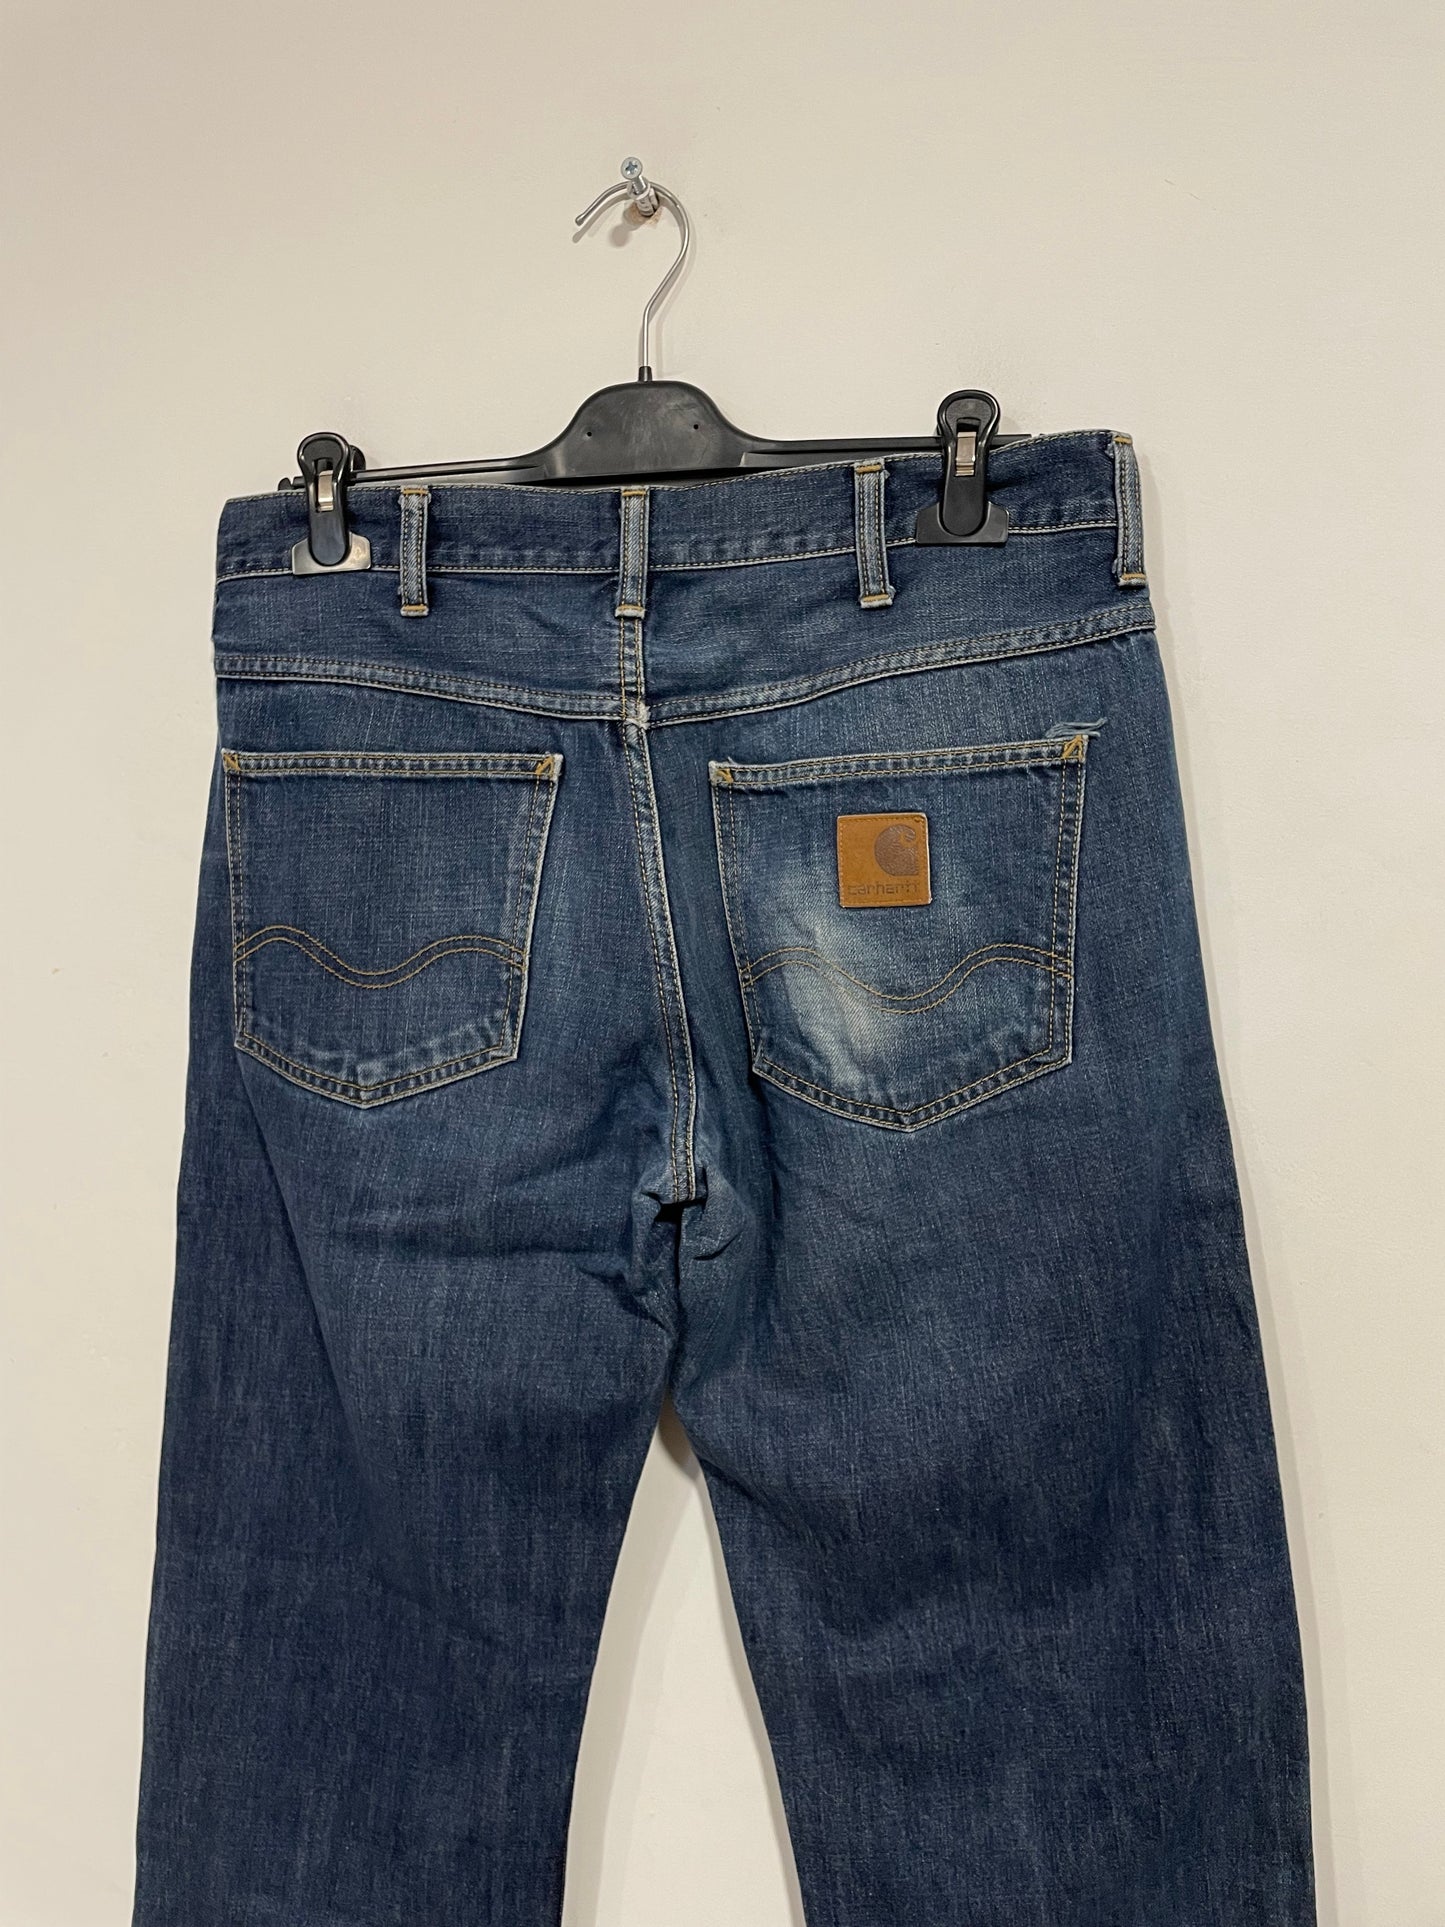 Jeans Carhartt Western pant (C933)